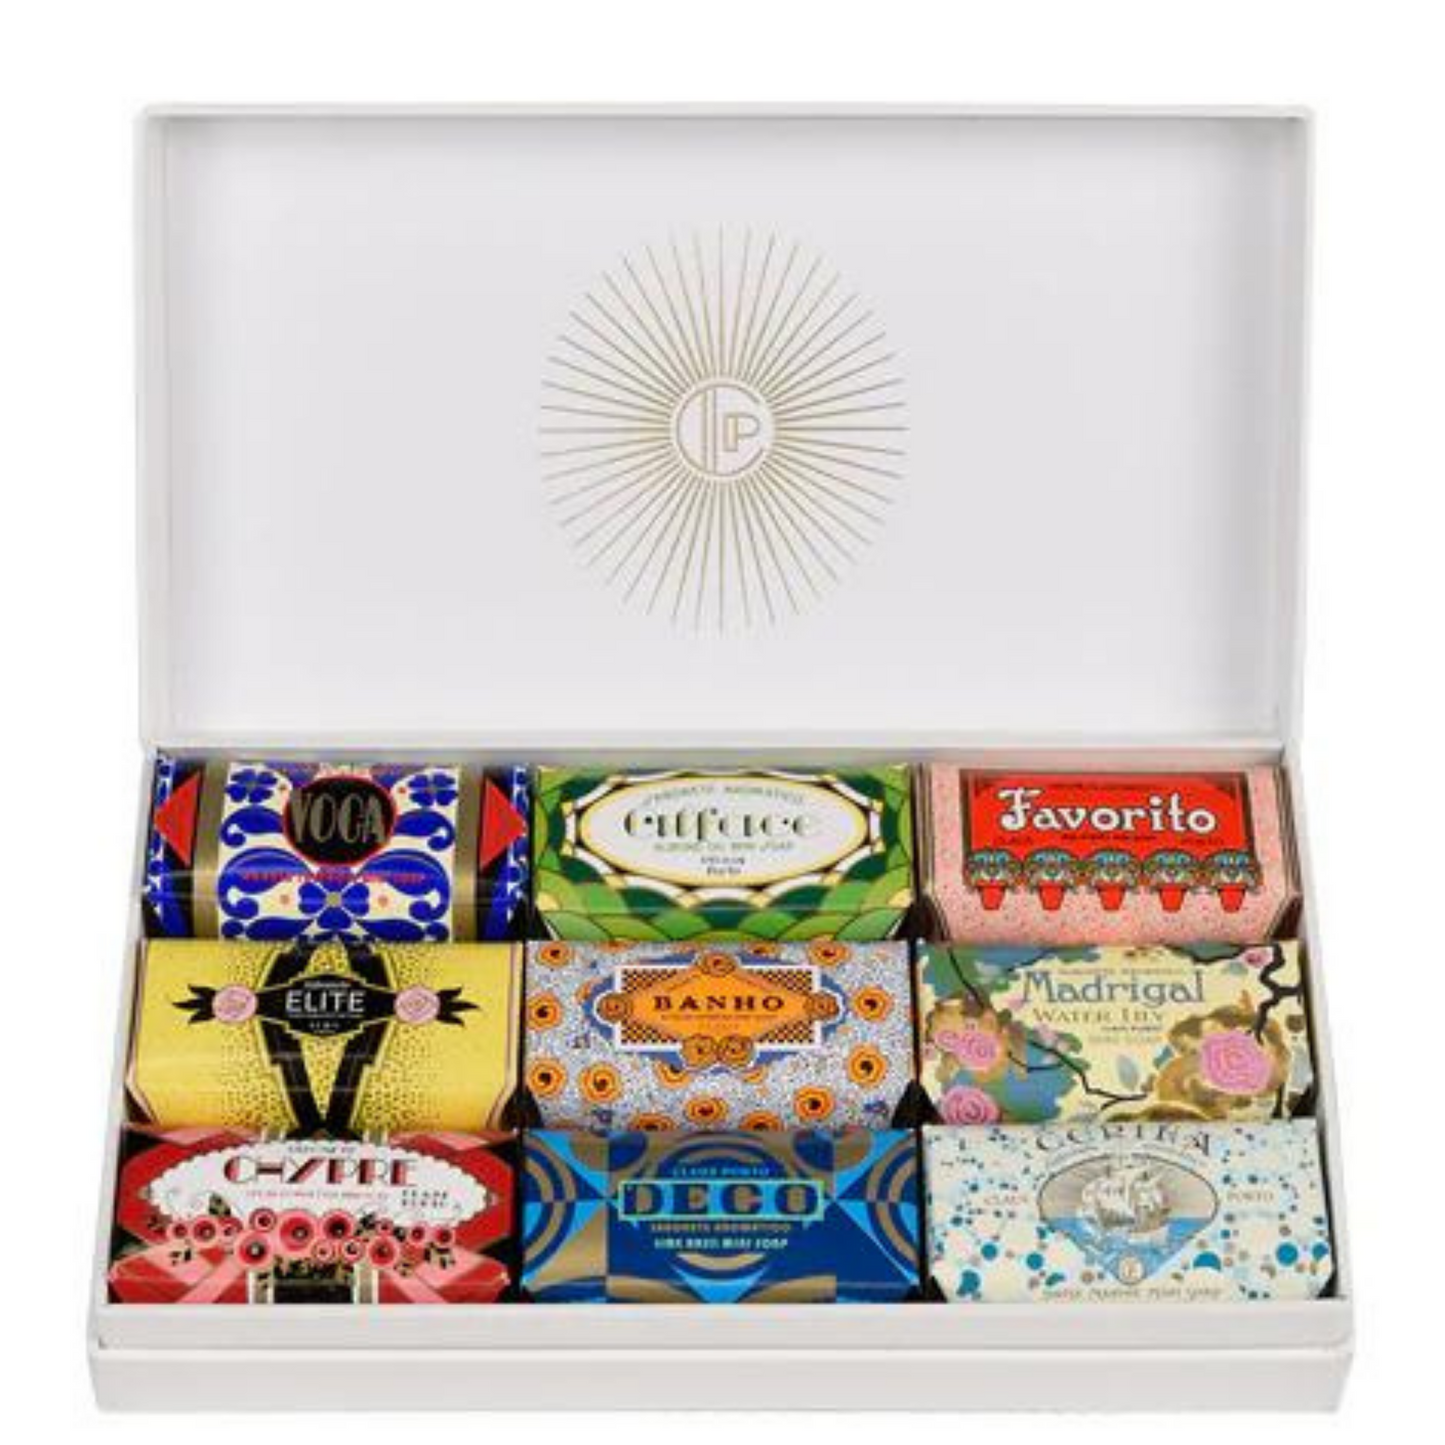 Primary Image of Deco Gift Box Mini Soaps